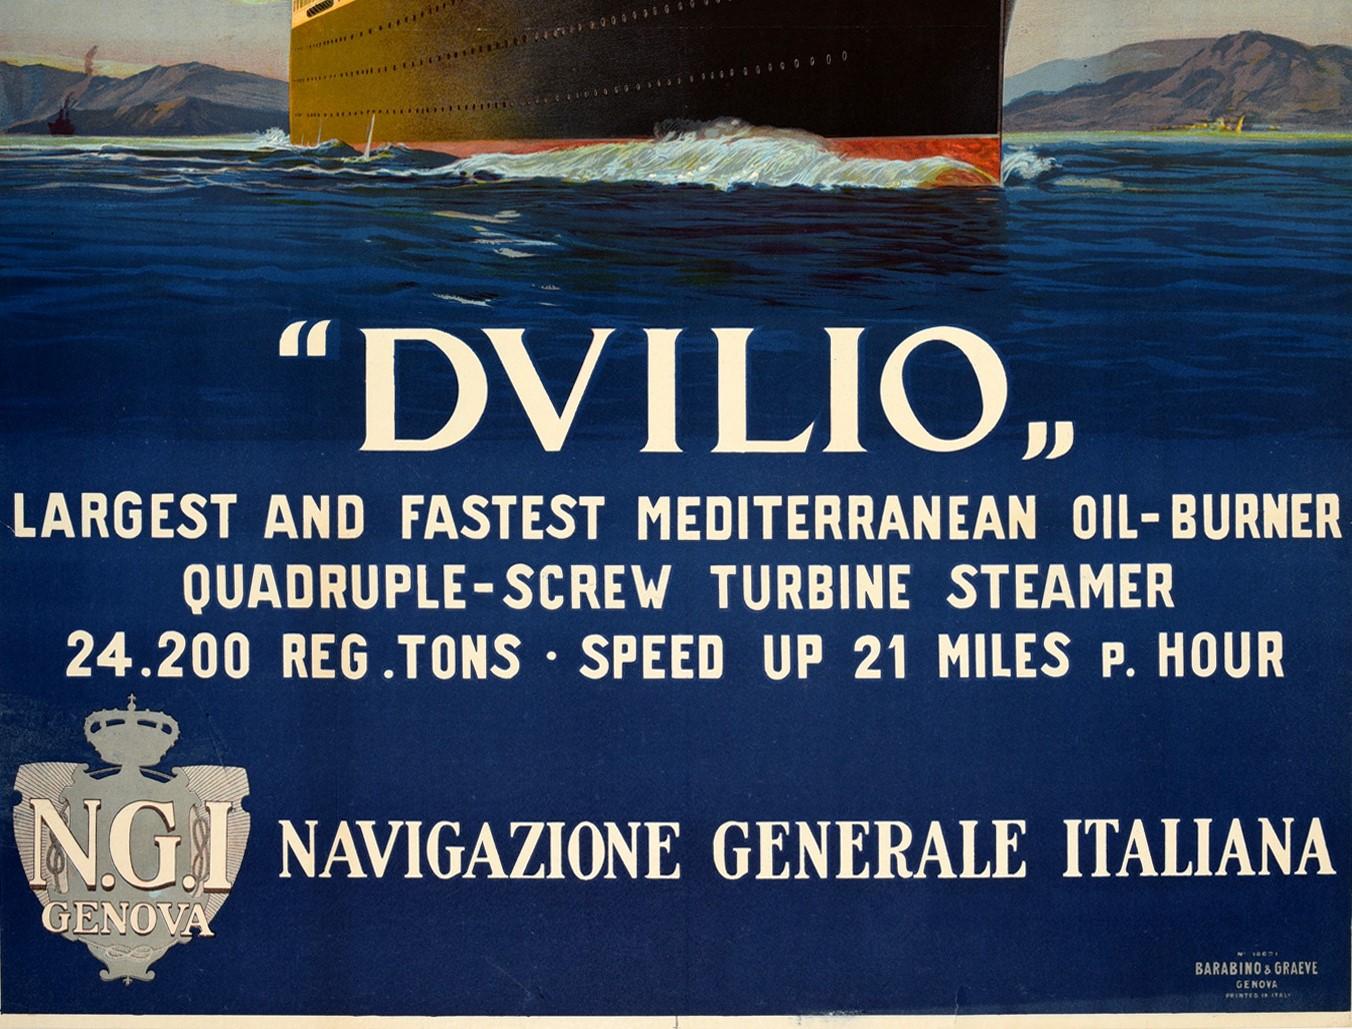 Italian Original Vintage Travel Poster SS Duilio Transatlantic Ocean Liner Mediterranean